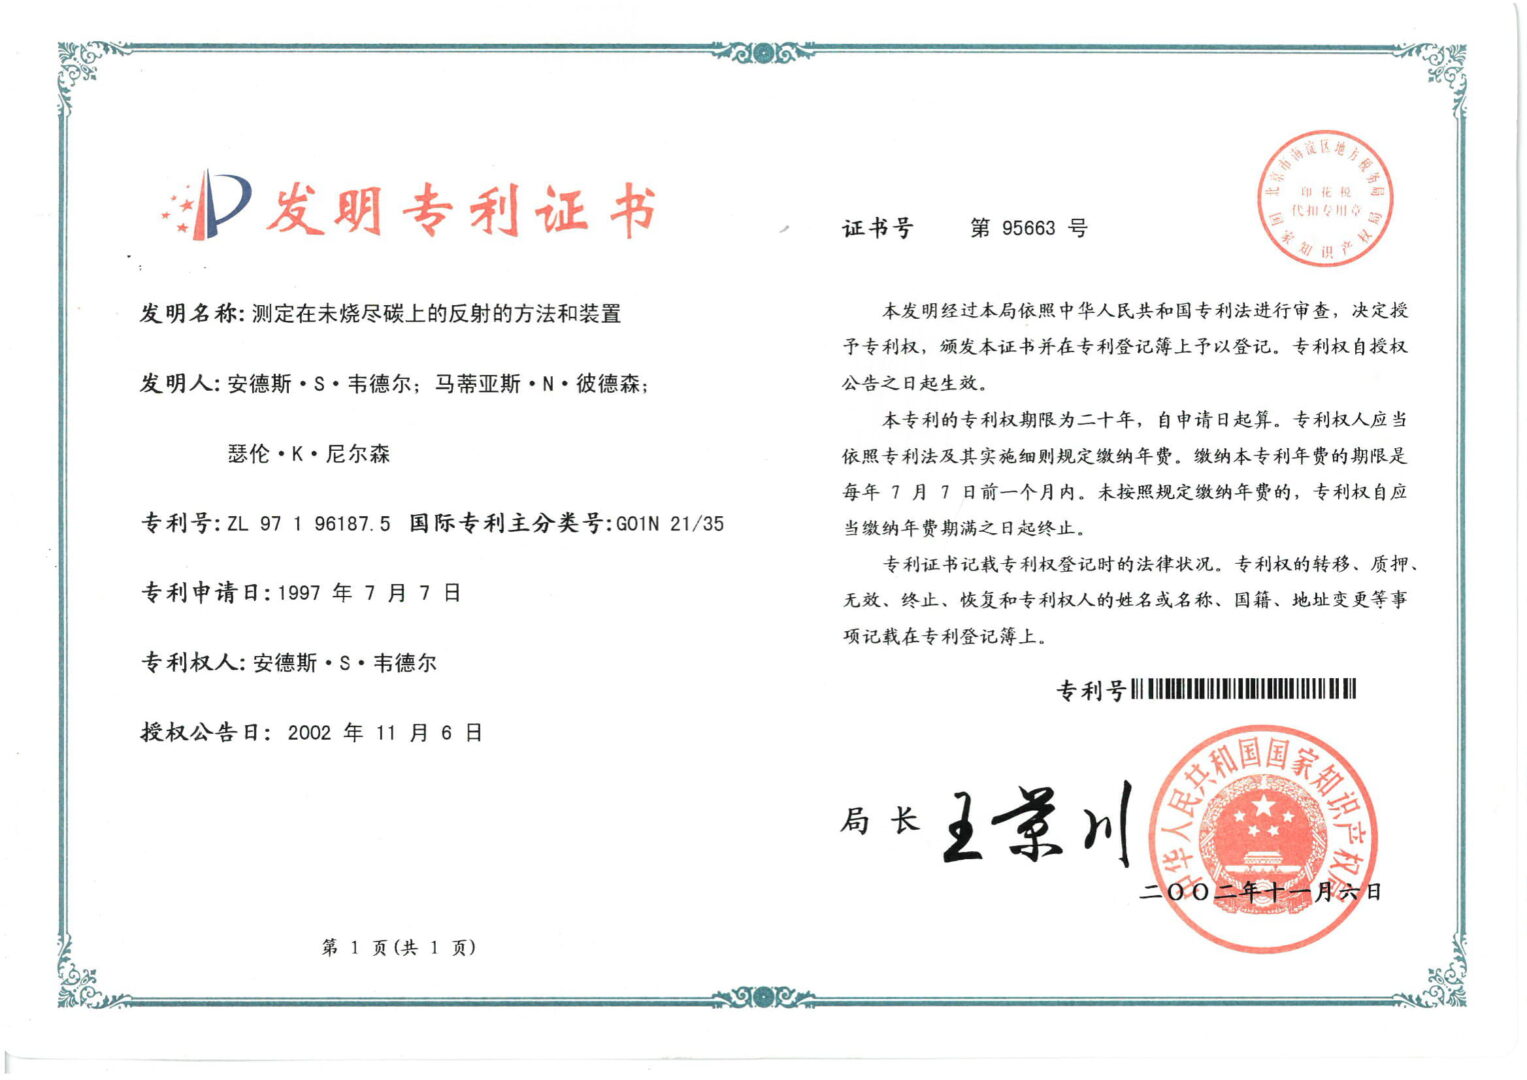 Patent nr. ZL 97 1 96187.5, China-1